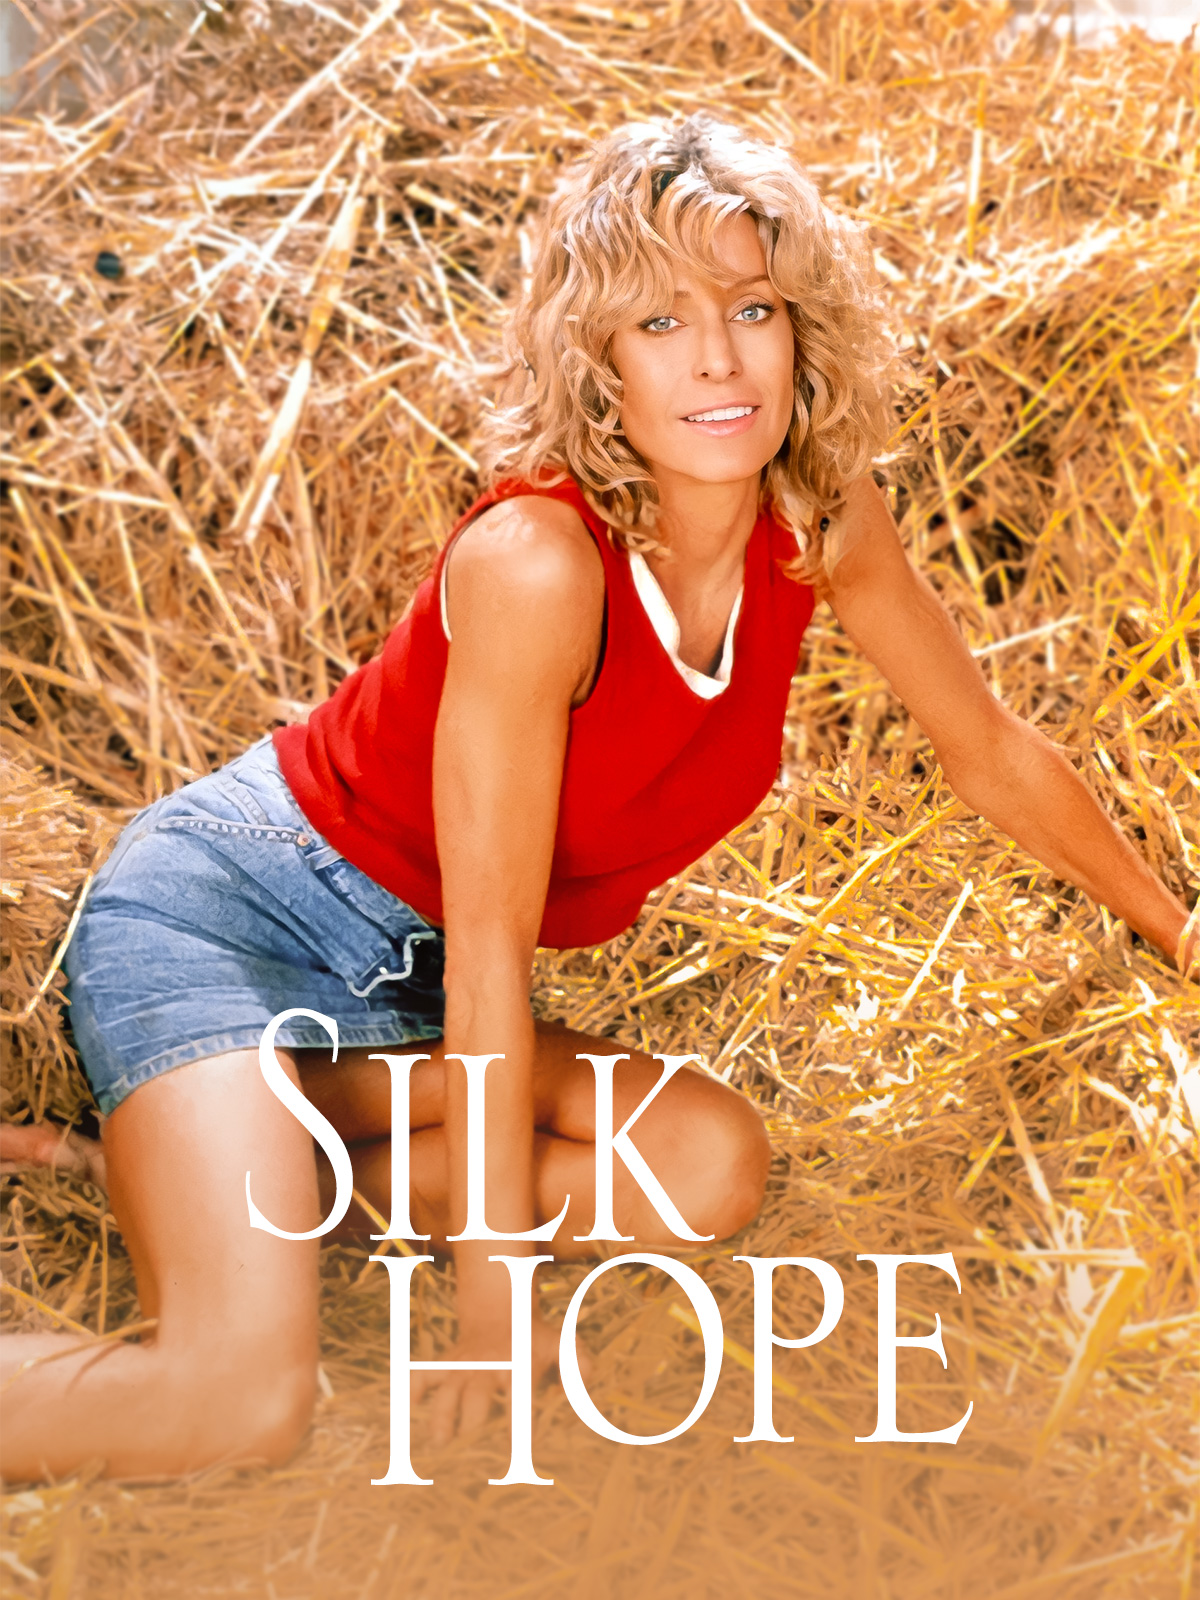 Silk Hope (1999) Screenshot 5 